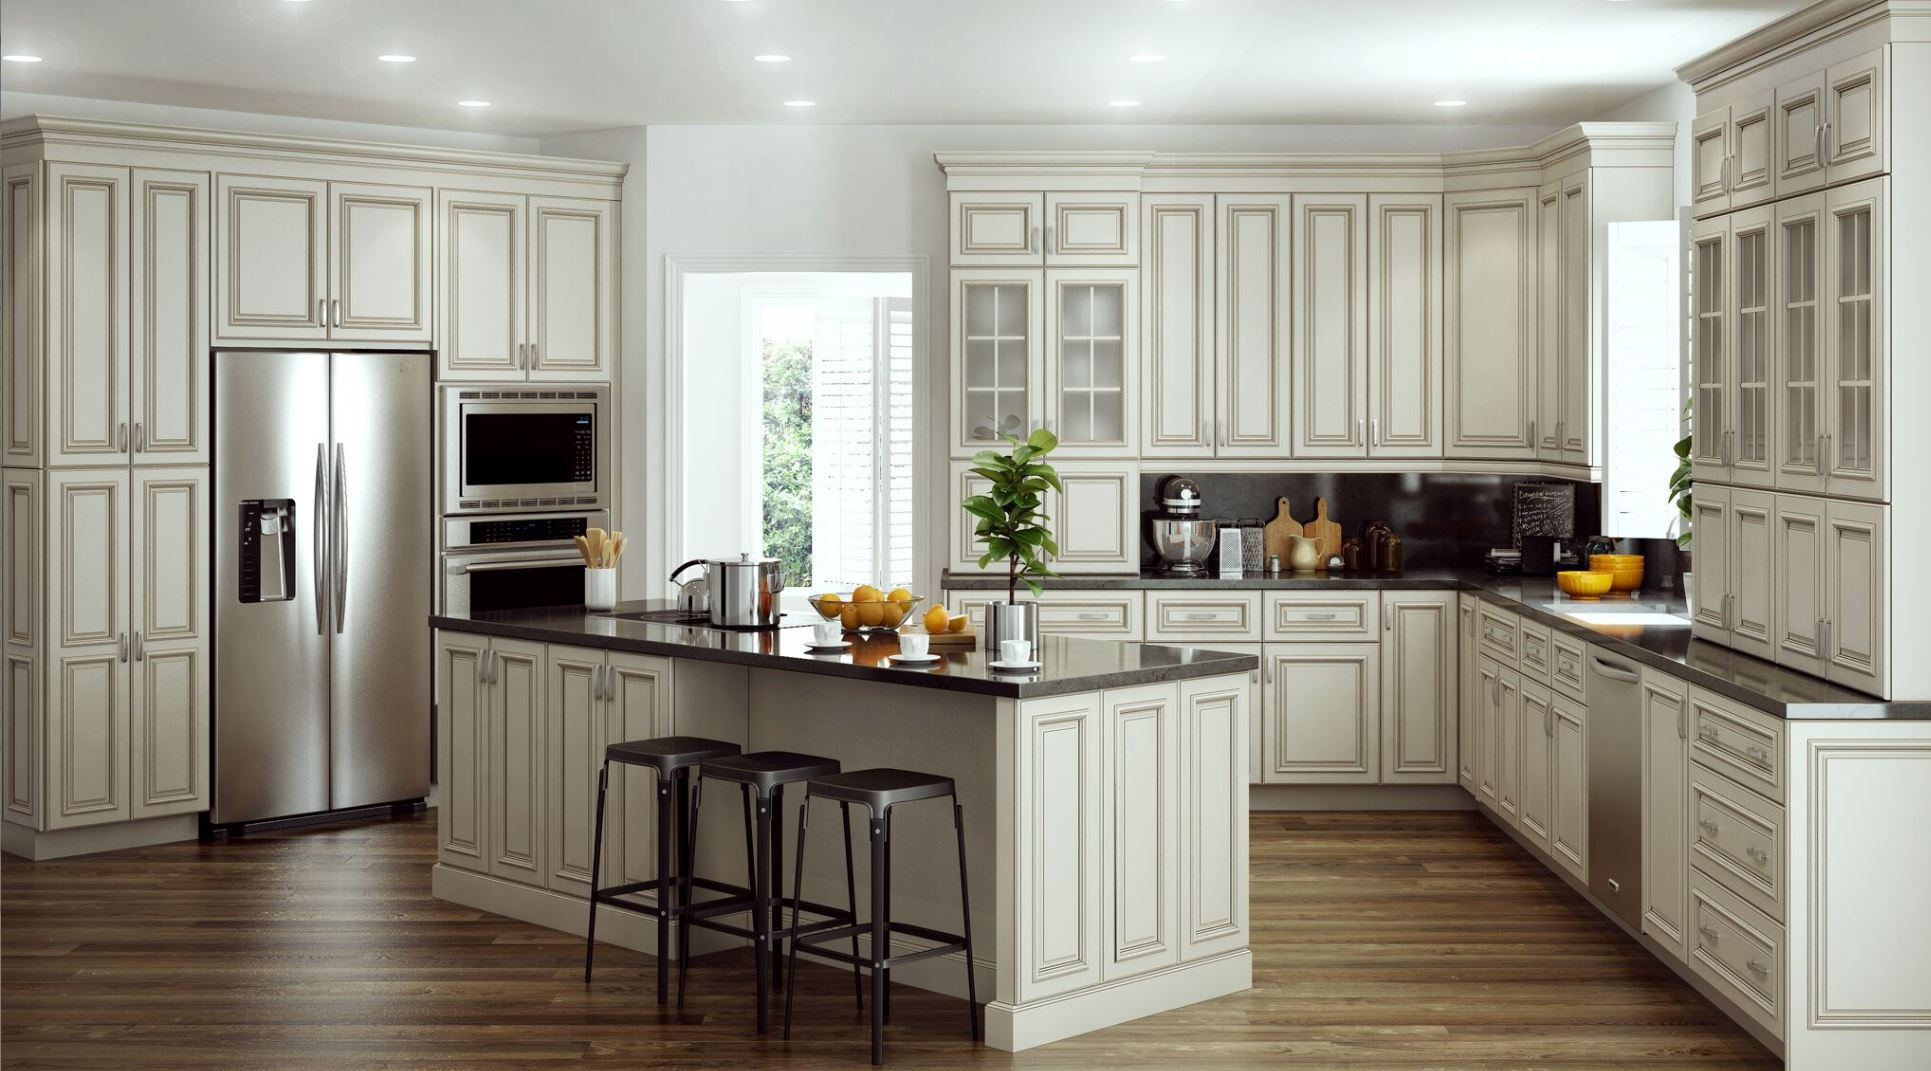 Homedepot Kitchen Cabinets
 Holden Base Cabinets in Bronze Glaze – Kitchen – The Home